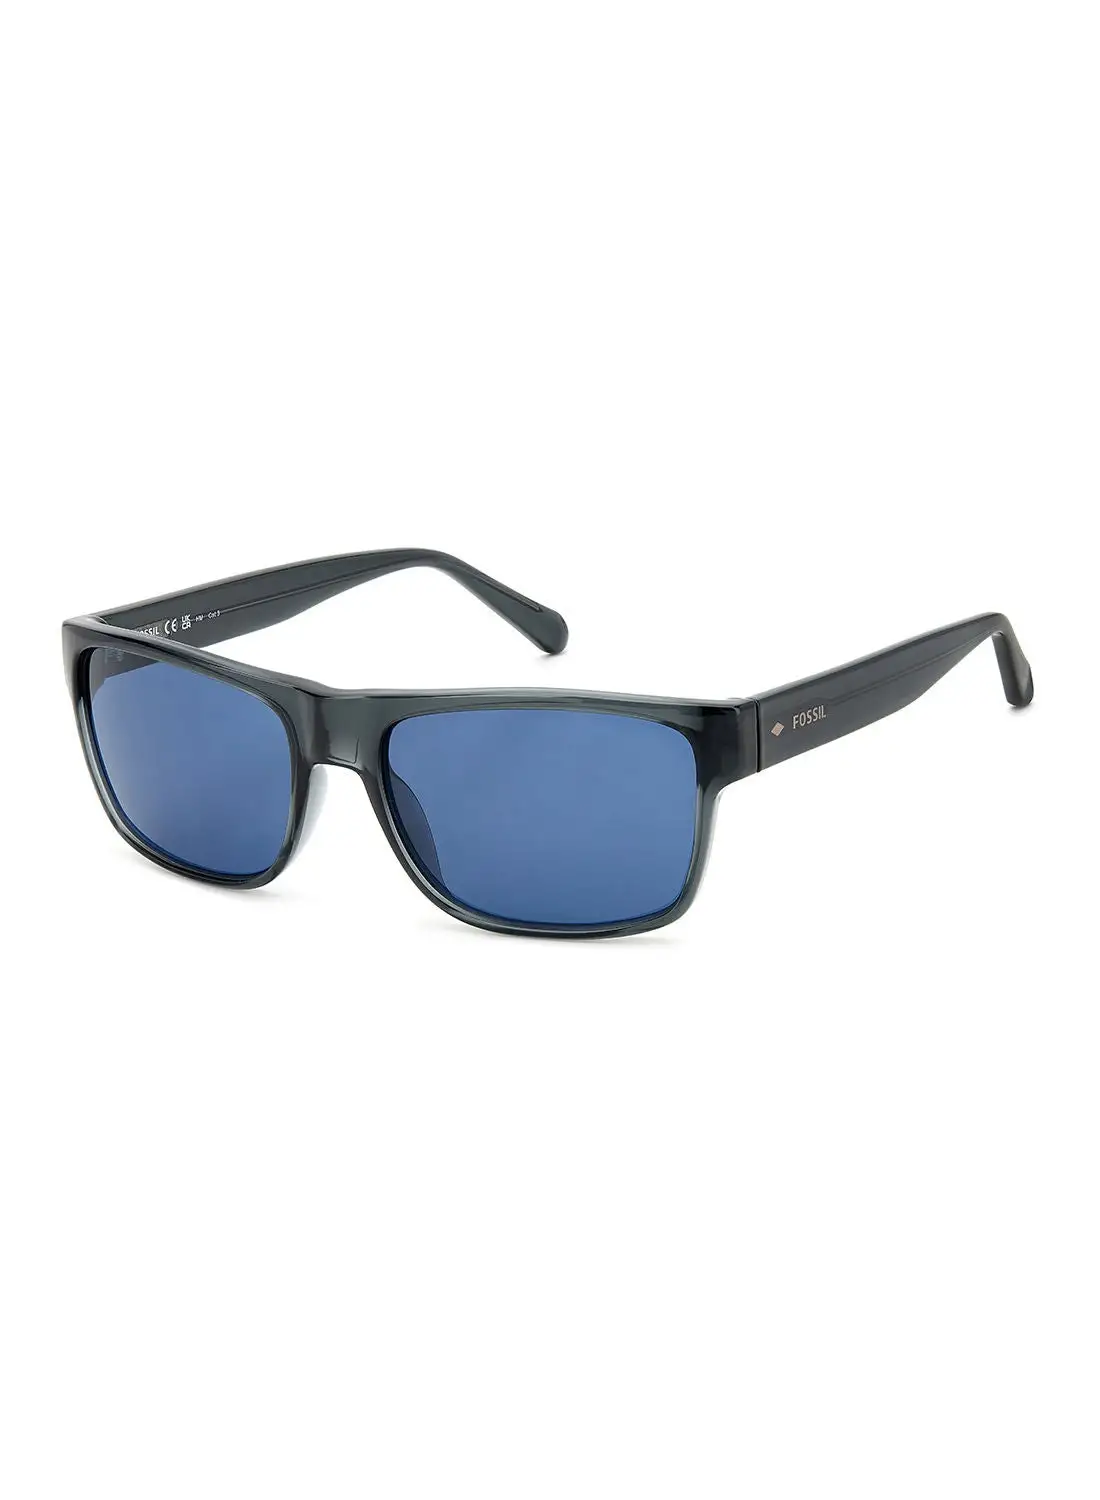 FOSSIL Men's UV Protection Rectangular Sunglasses - Fos 3148/S Grey 58 - Lens Size: 58 Mm